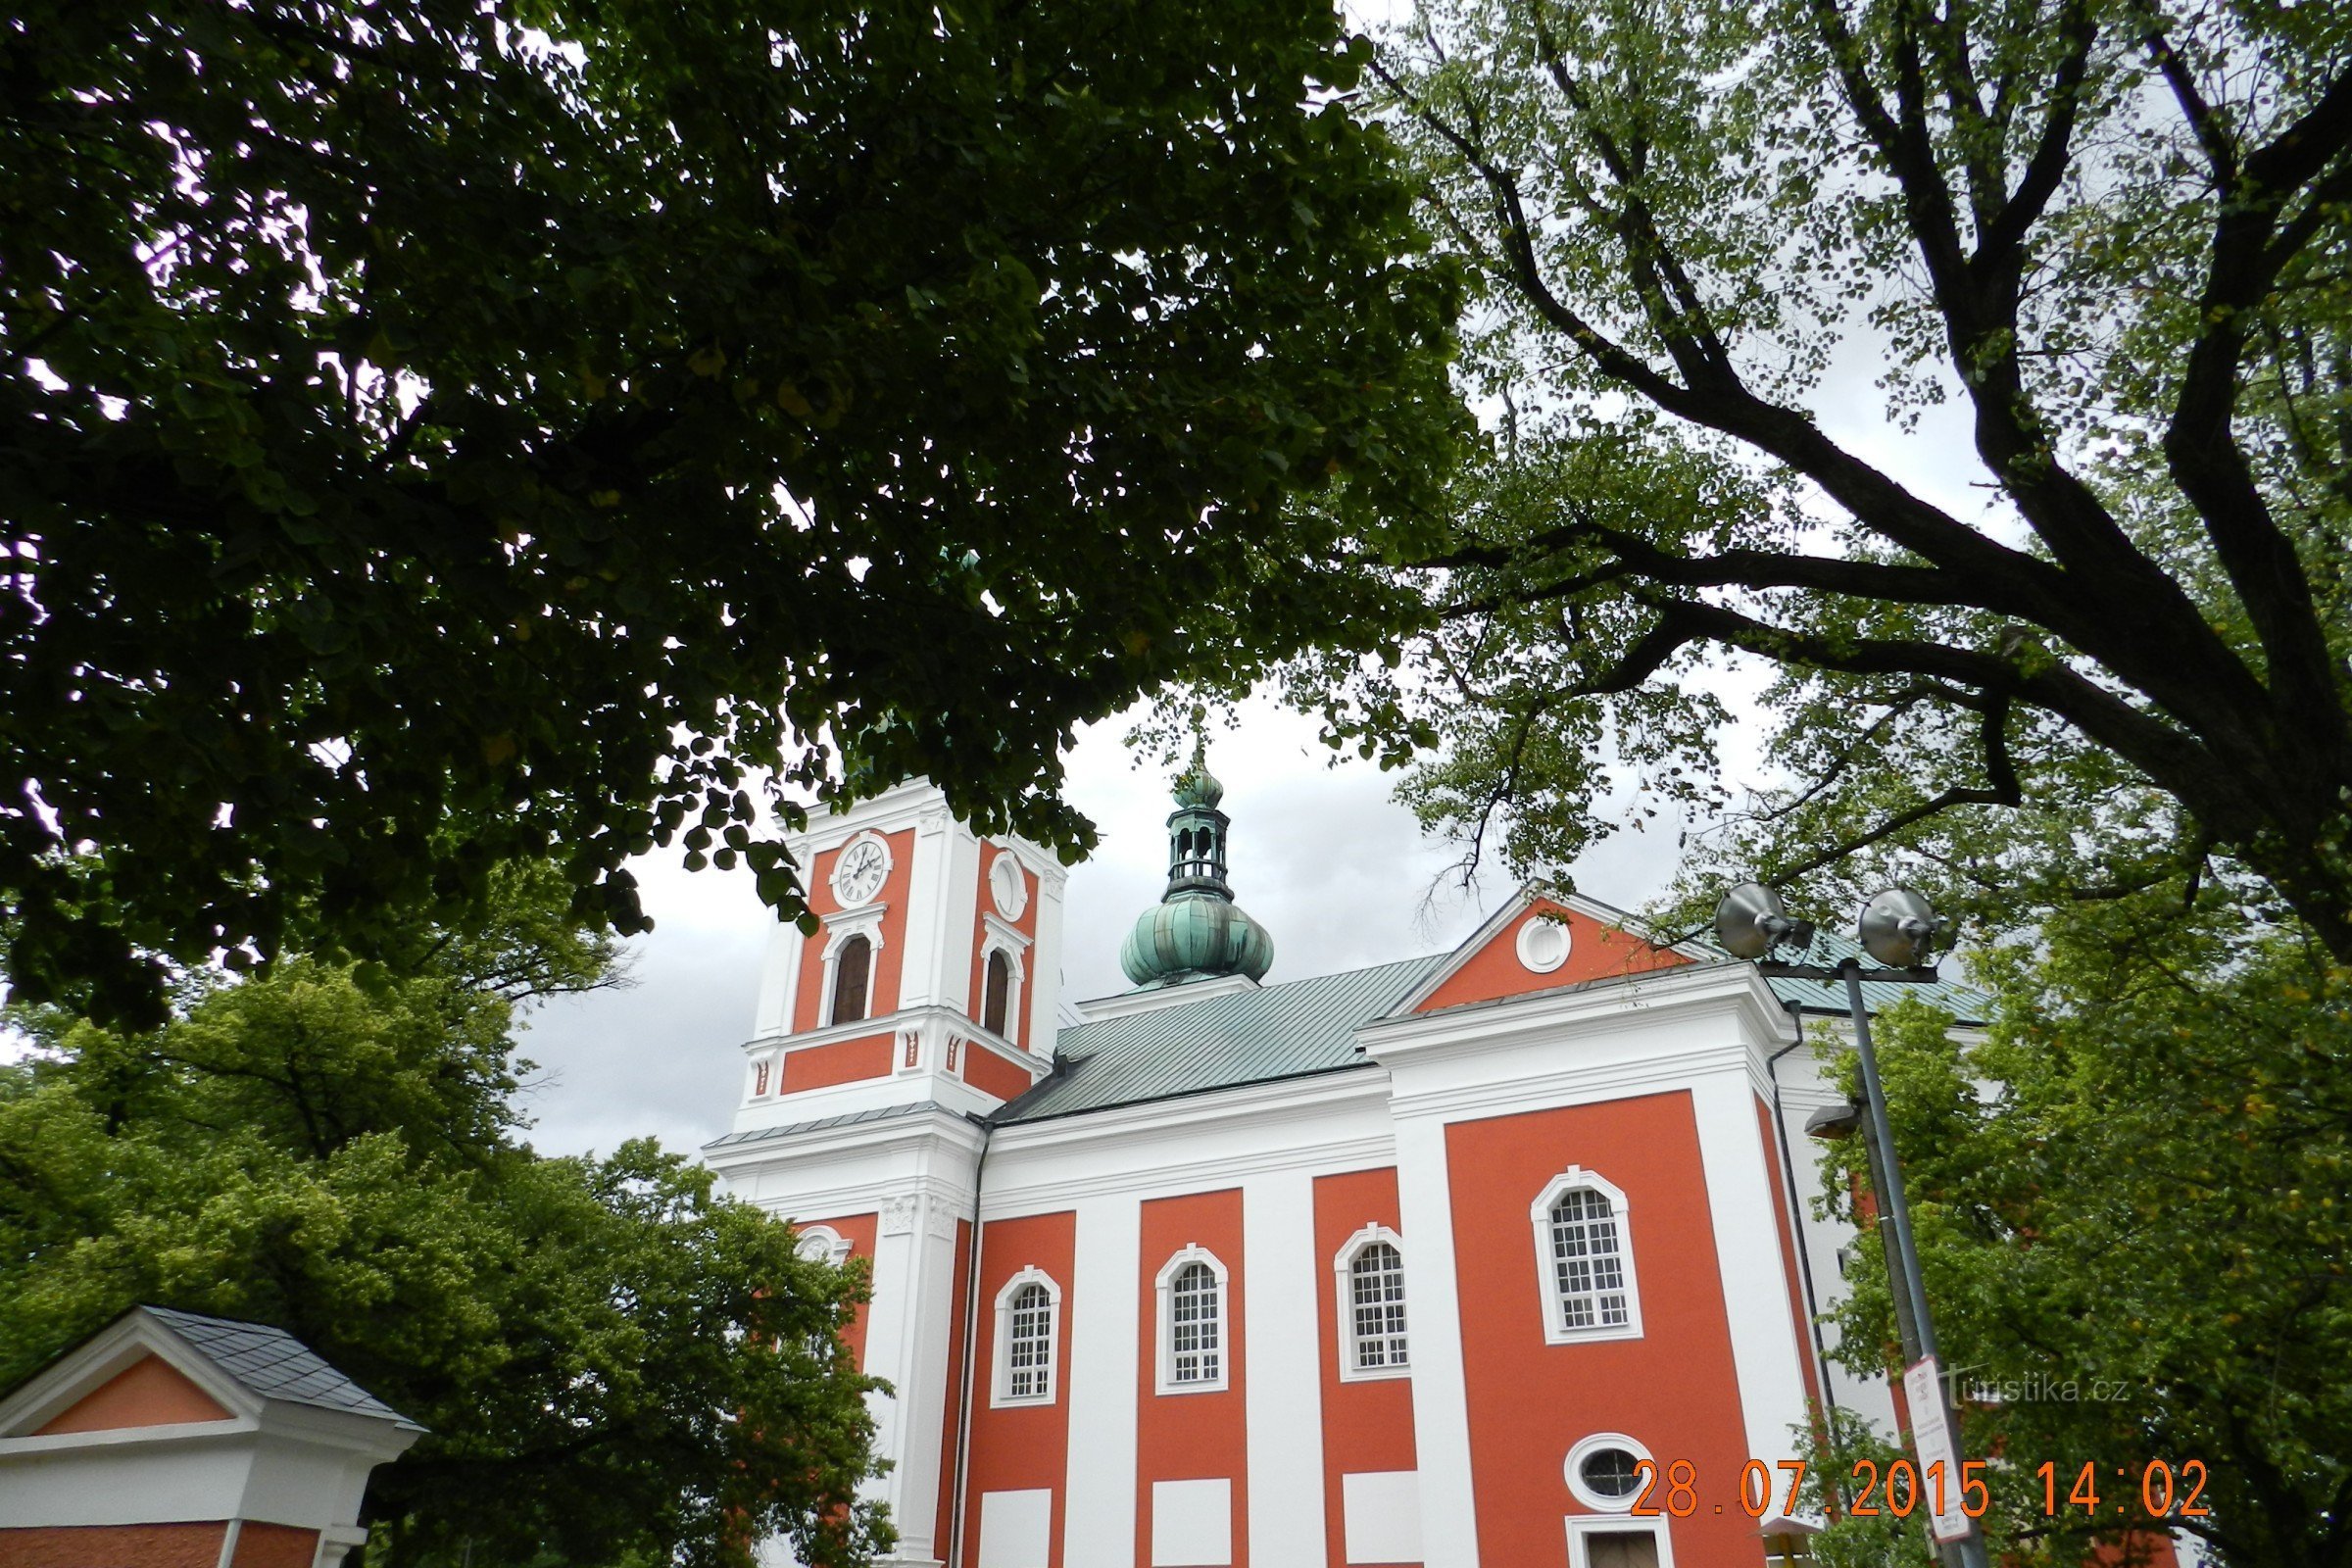 Cvilín - паломницька церква PMSedmibolestné, ампірна каплиця в околицях - духовний центр Сілезії